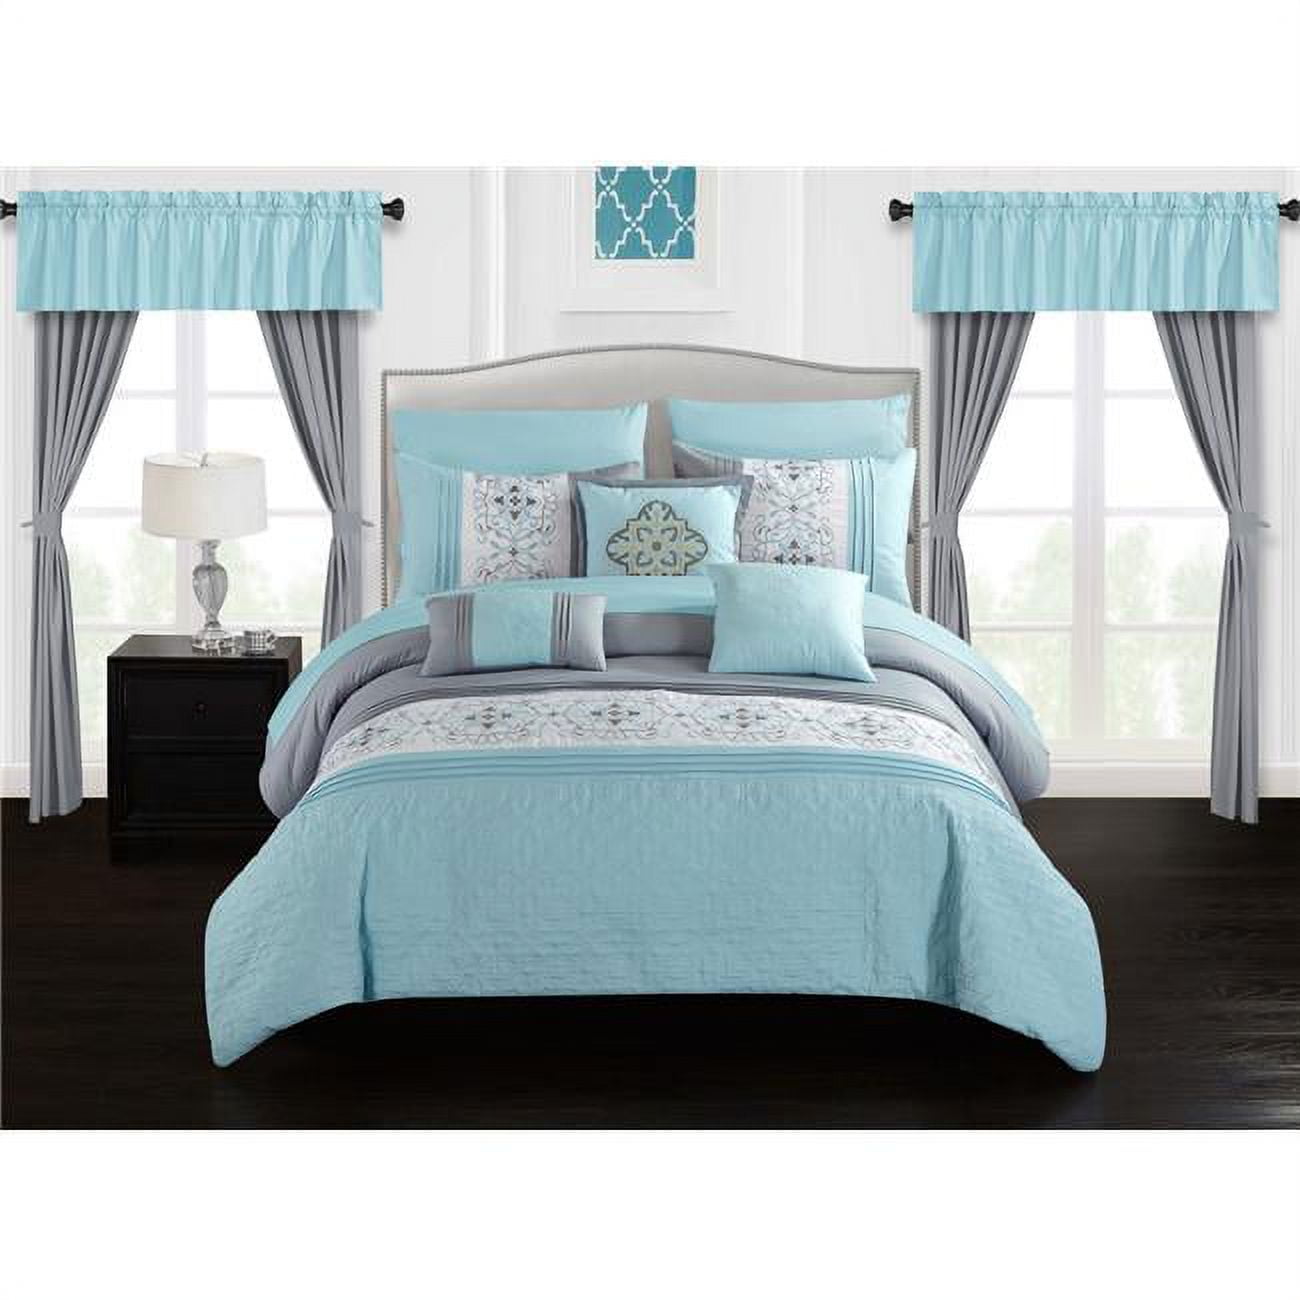 Bcs06714-us Renard Comforter Set, Aqua Blue - King - 20 Piece